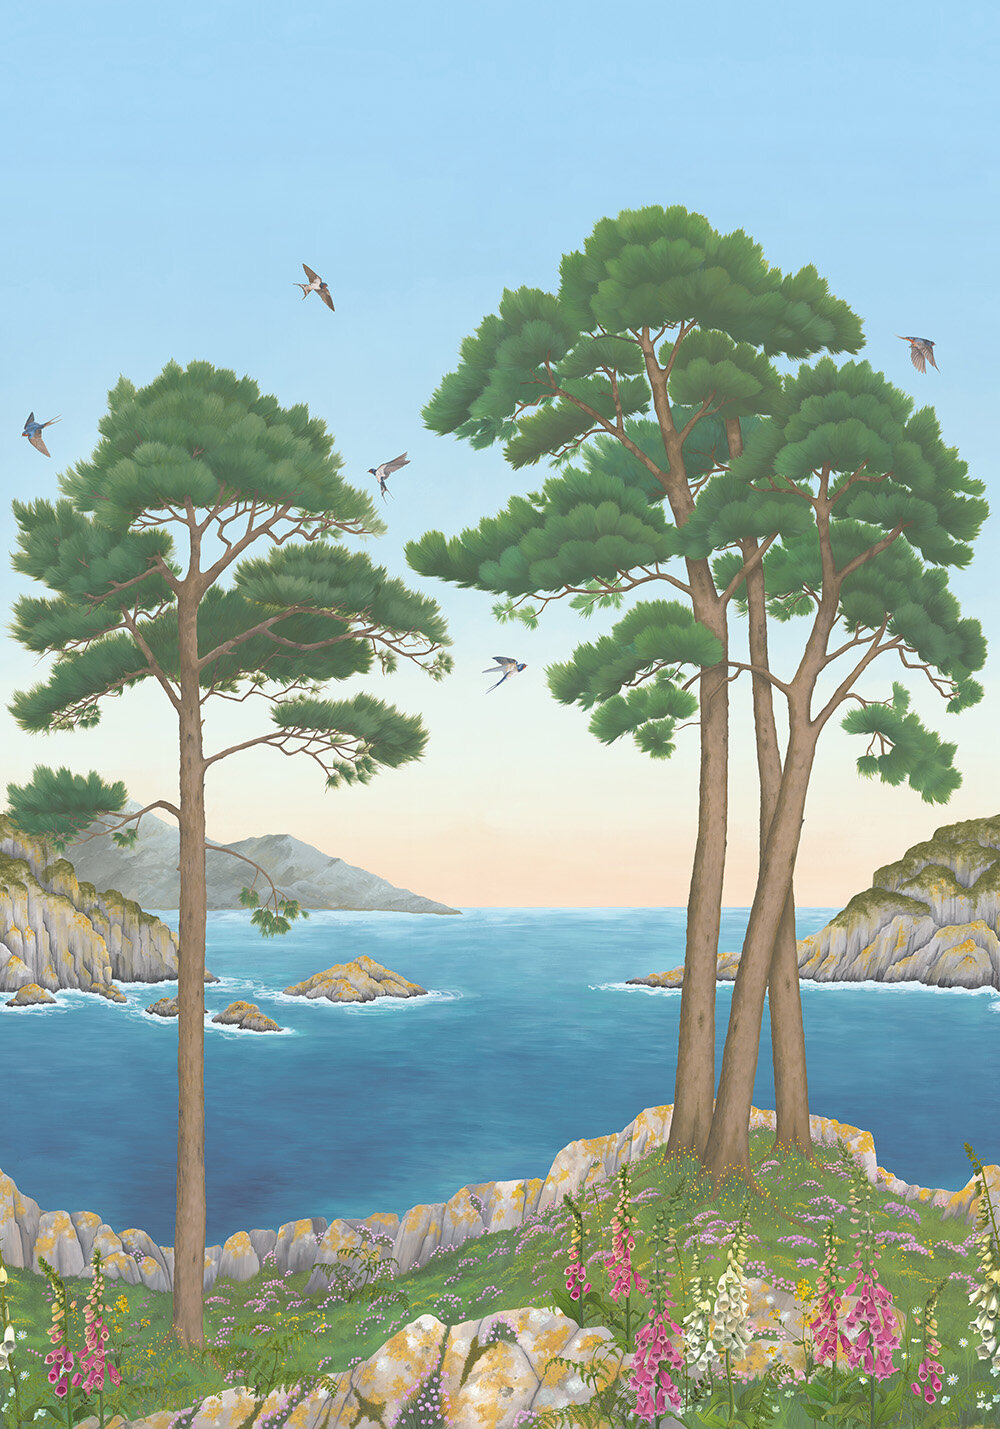 Coastline Mural - Azure - by Osborne & Little